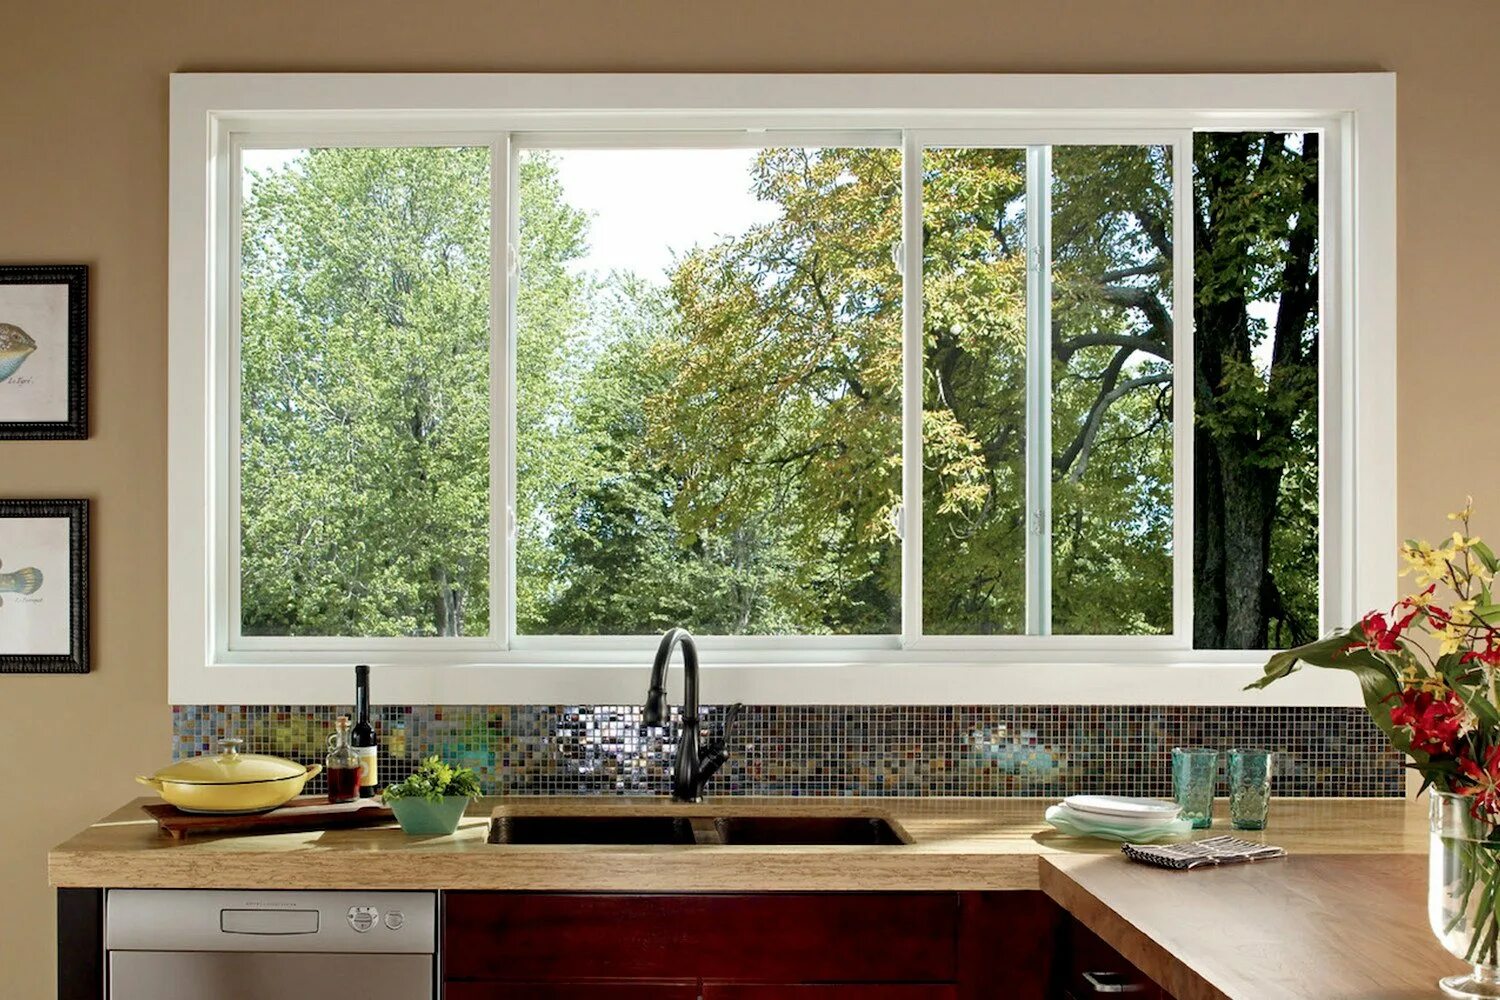 Установка пластикового окна кухни. Кухня с окном. Пластиковое окно на кухню. Горизонтальное окно на кухне. Отделка окна на кухне.